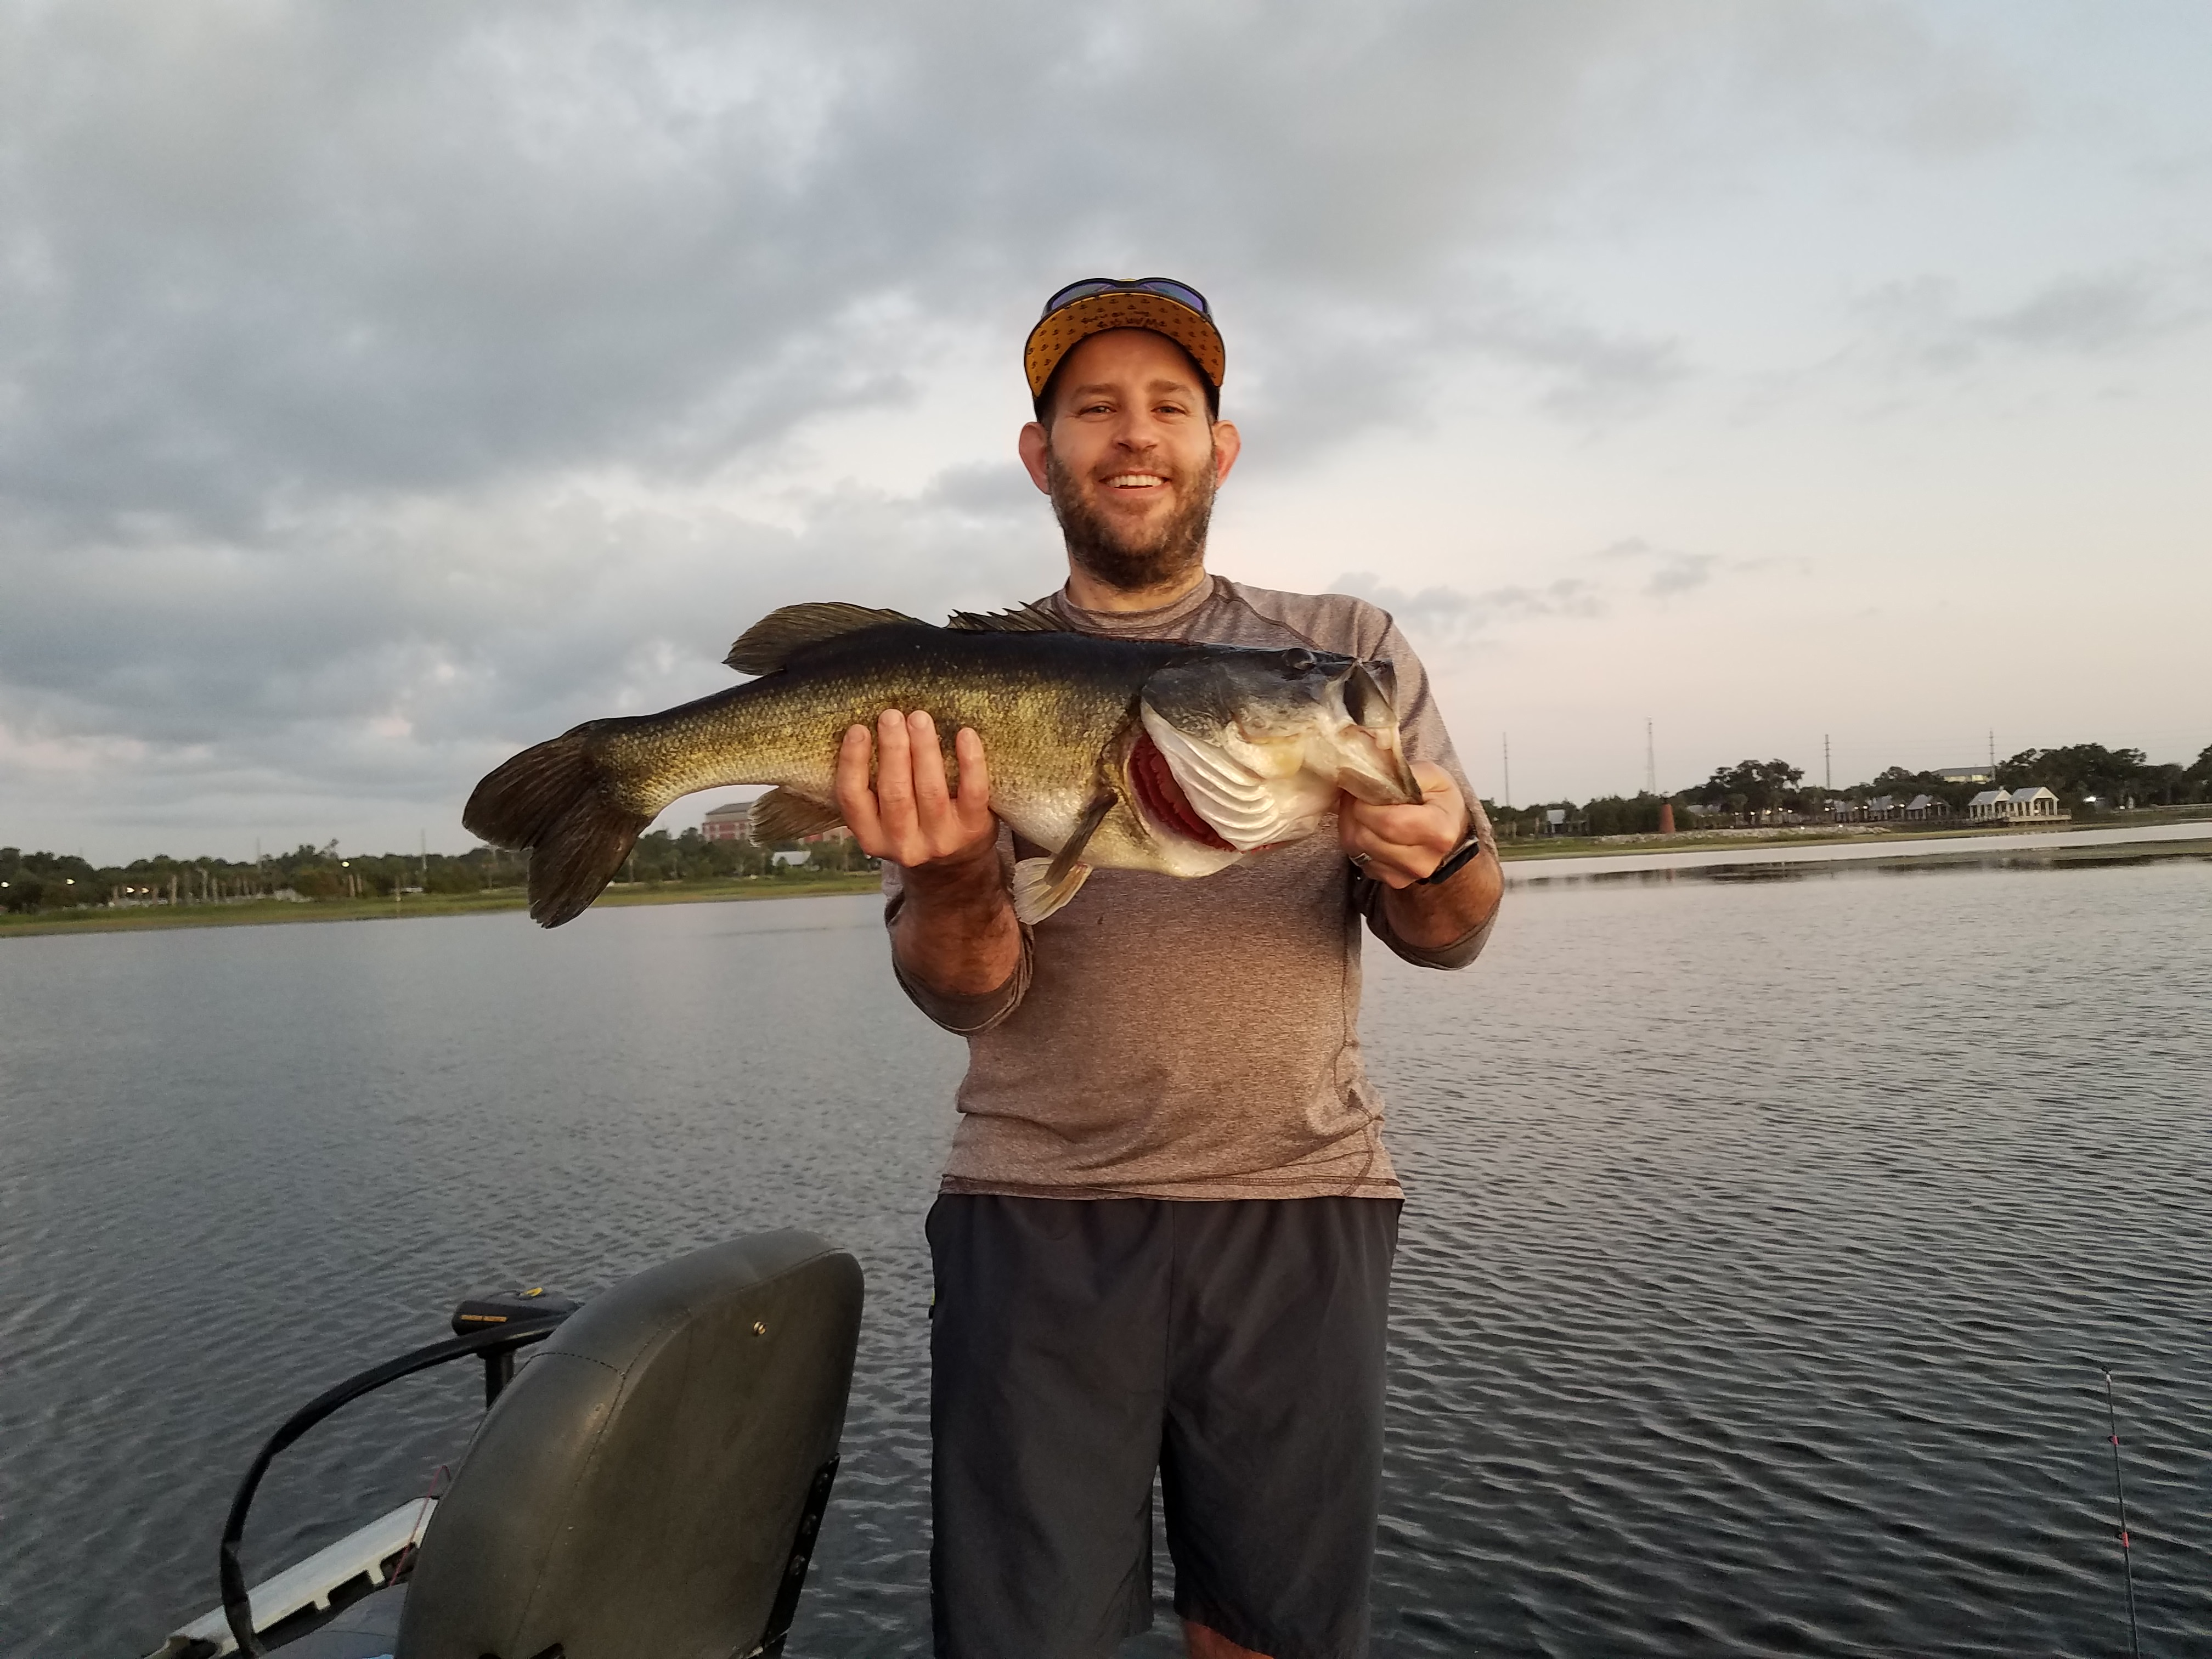 Pro Bass Fishing Tips